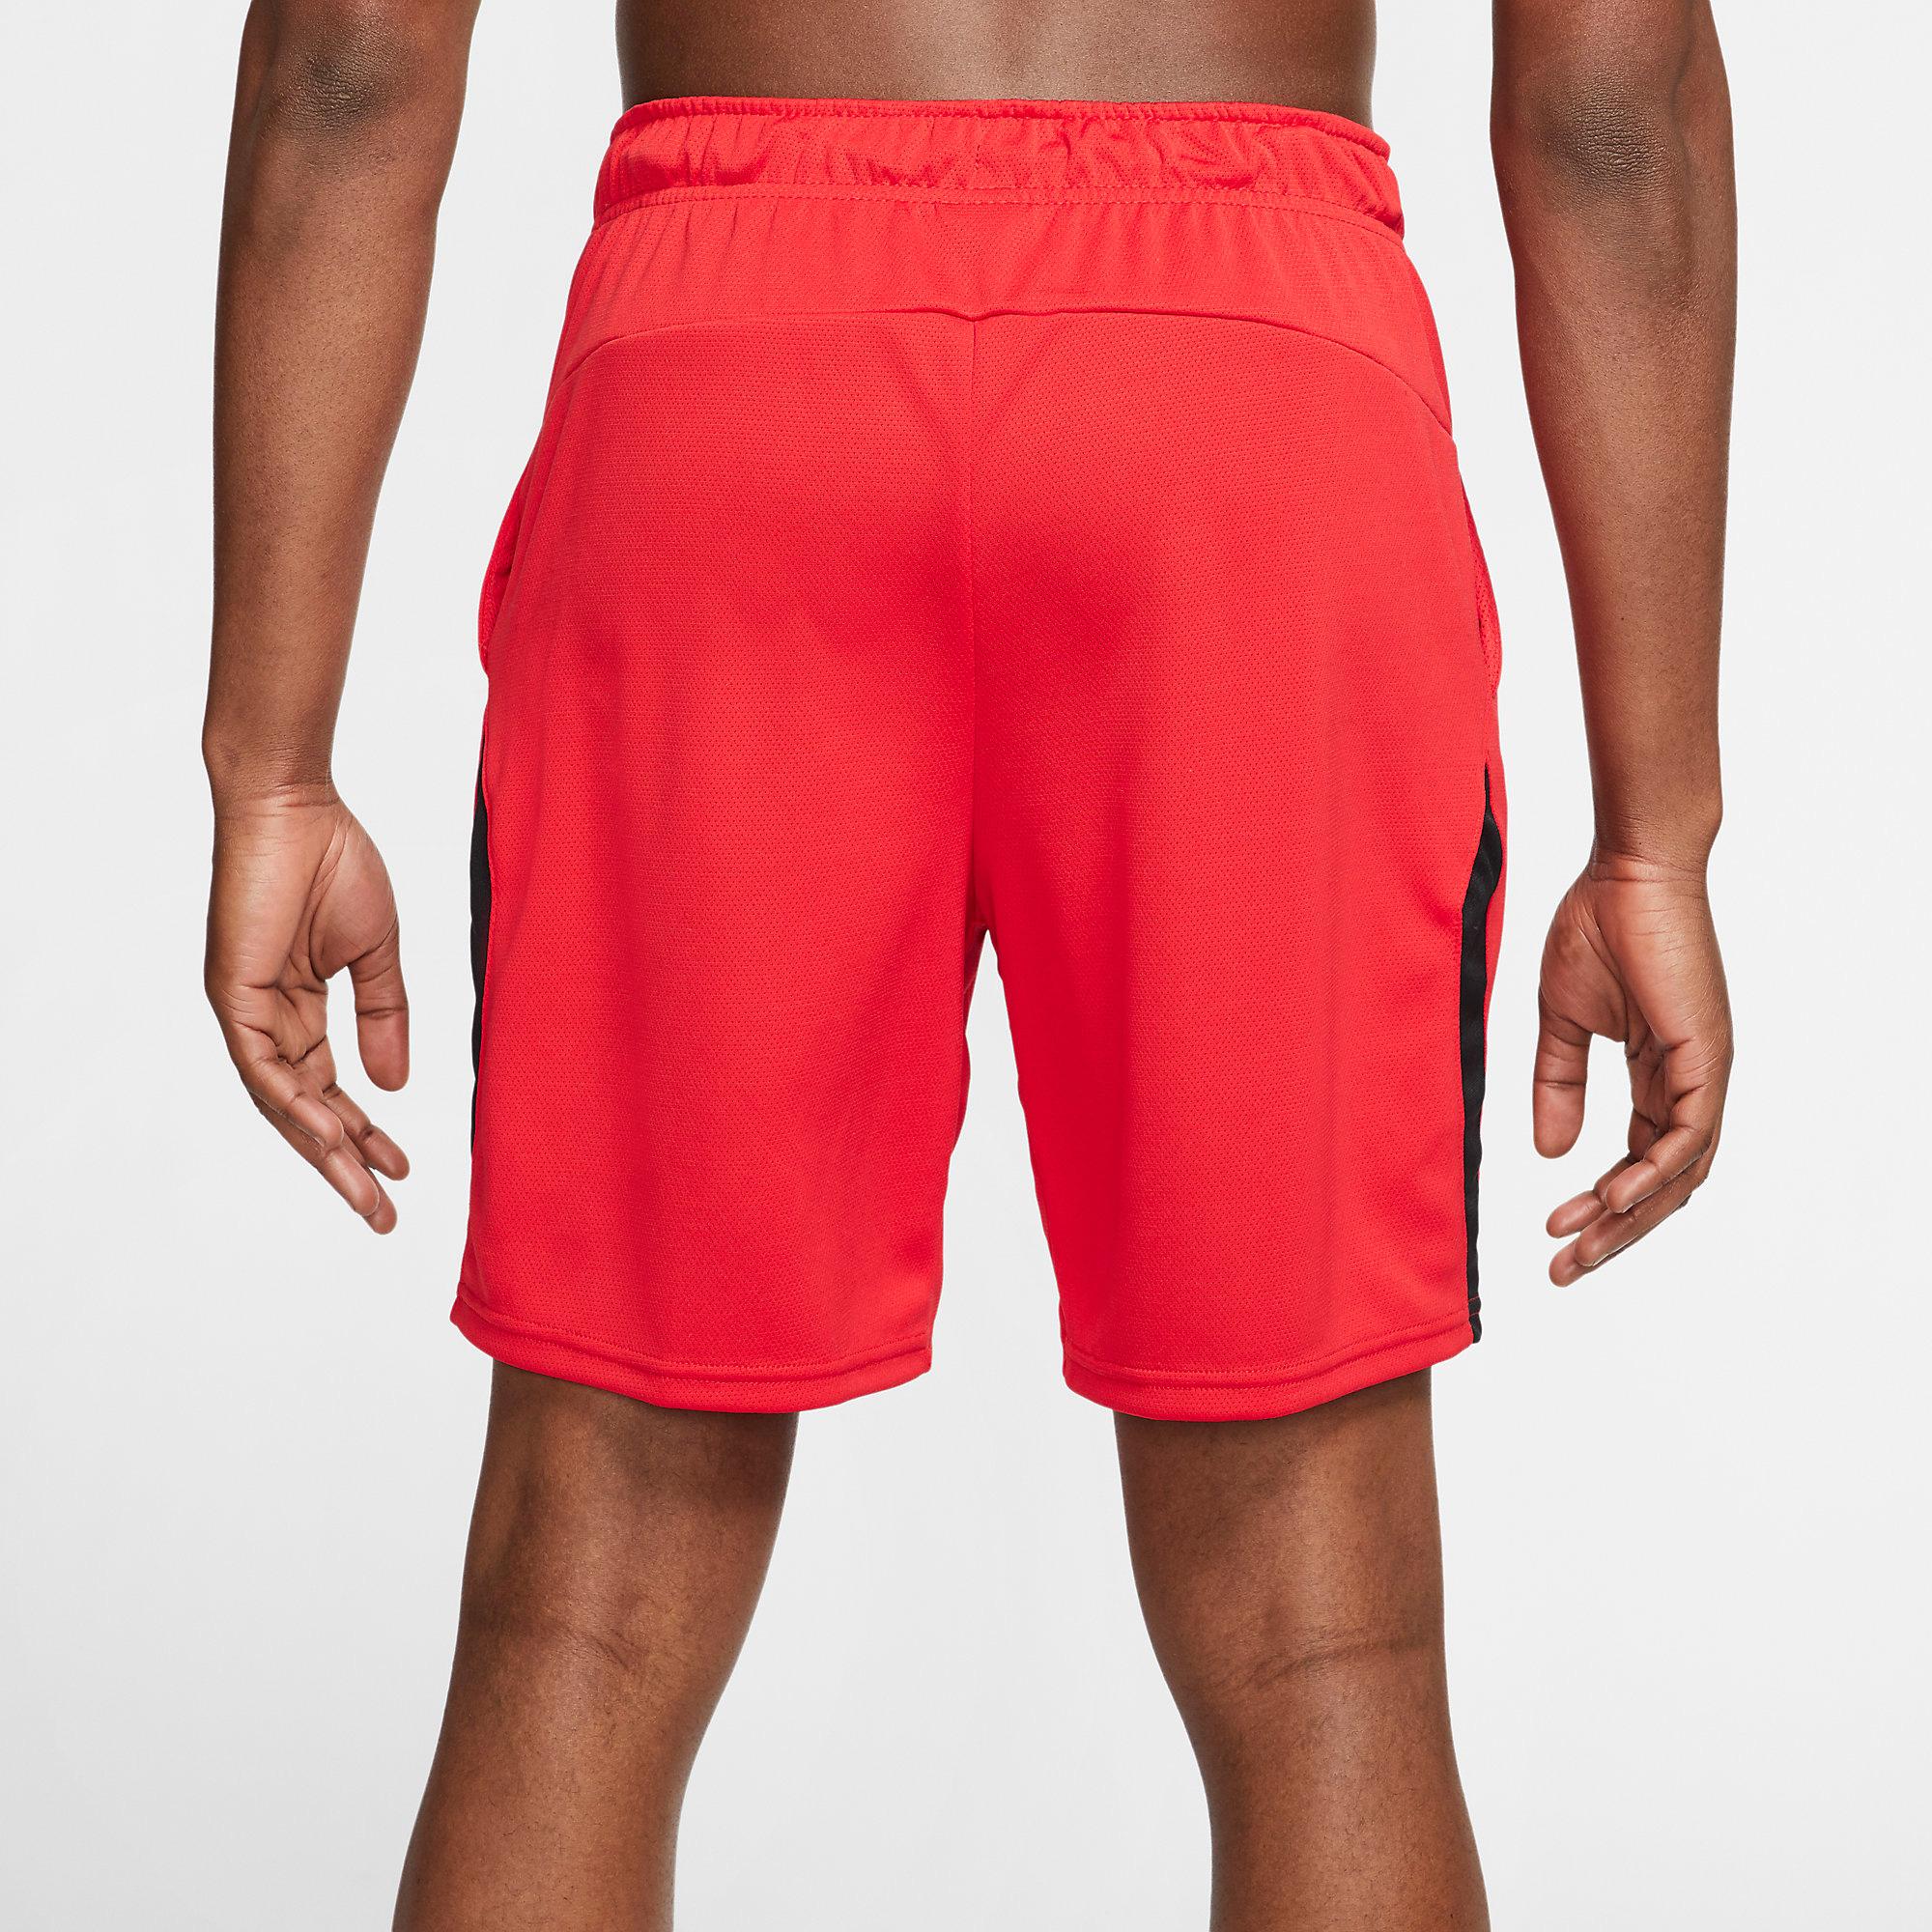 Nike Mens Dri-FIT 7 Inch Training Shorts - Gym Red/Black - Tennisnuts.com